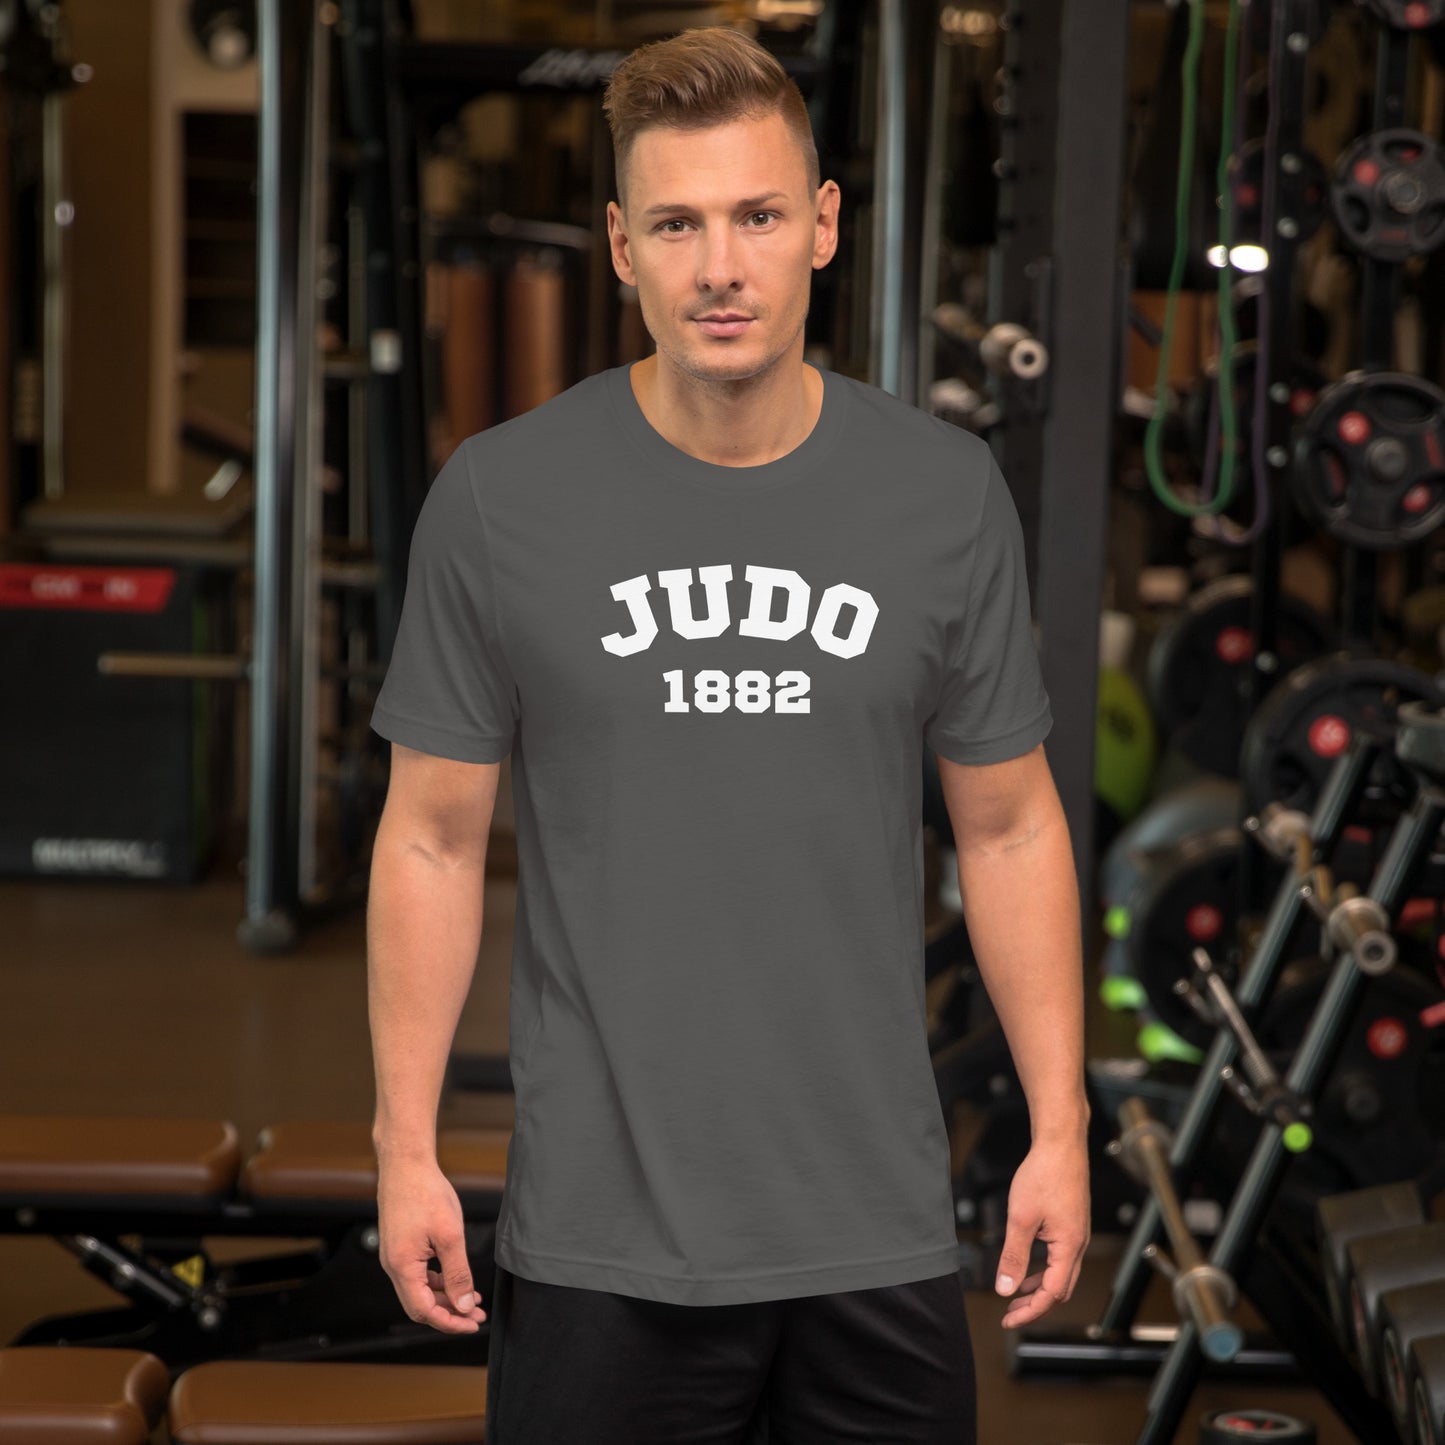 Judo 1882 T-Shirt - The Spirit of Judo Lives On Tee